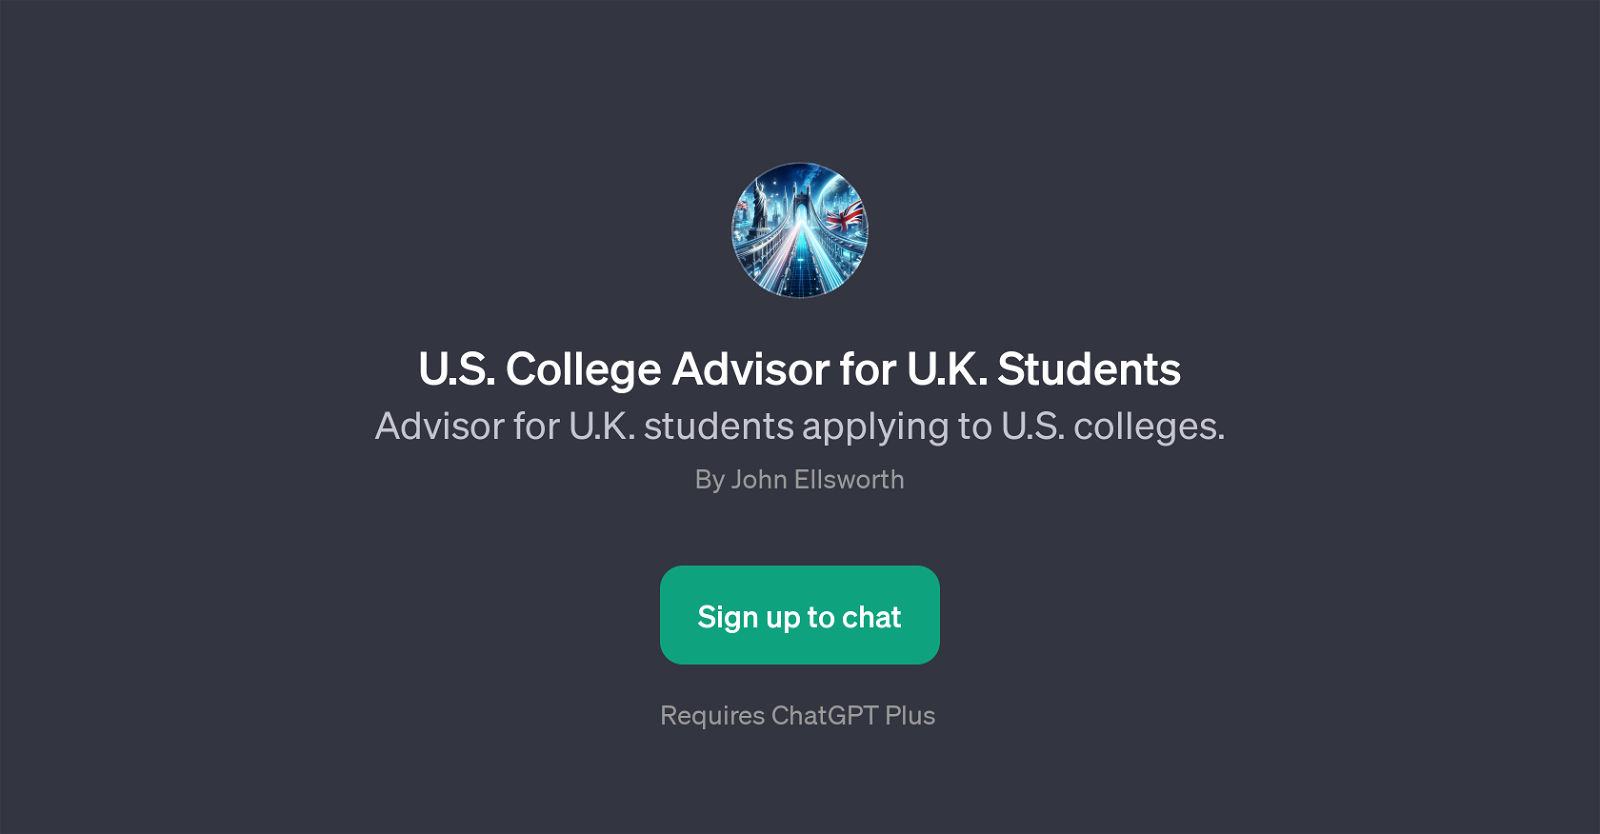 U.S. College Advisor for U.K. Students website